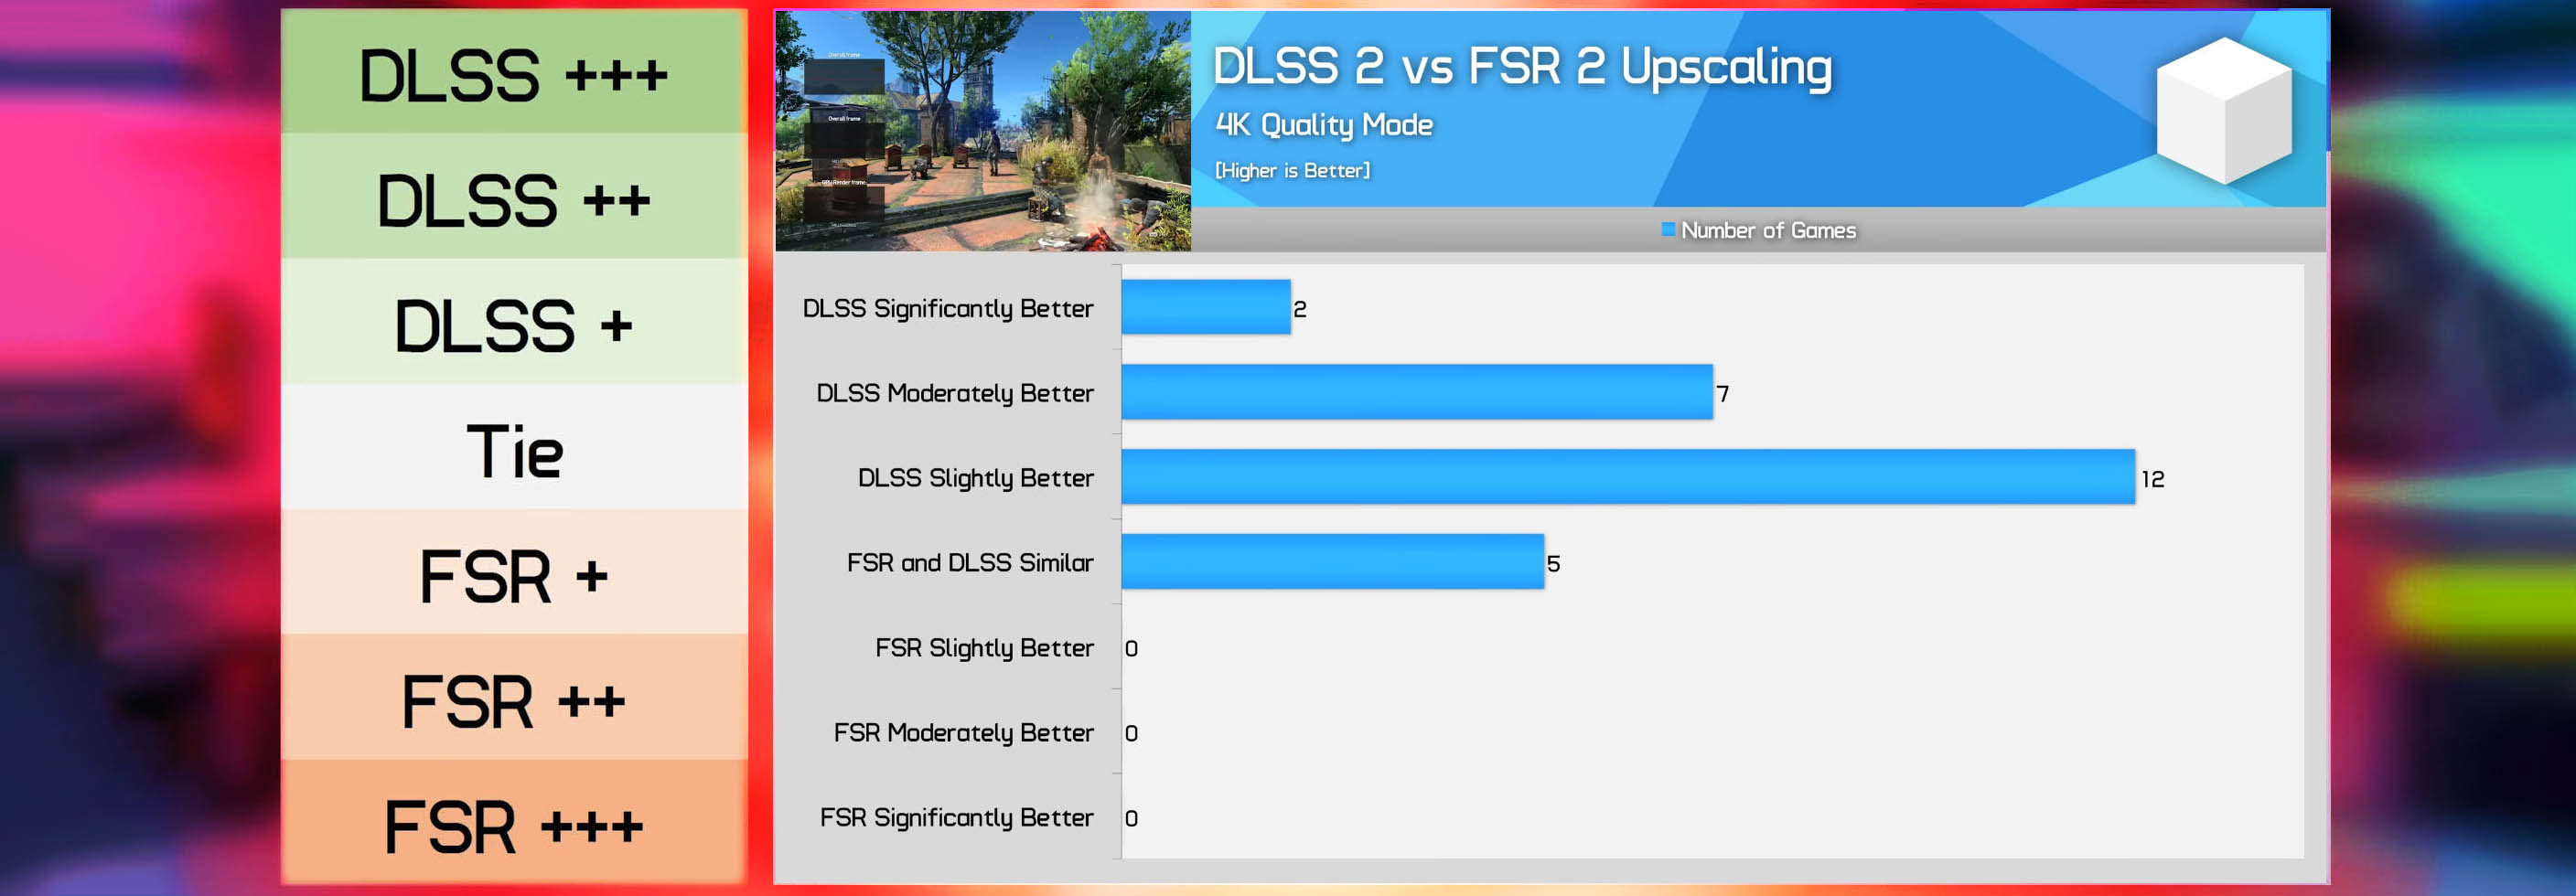 God of War (2018) PC Performance: DLSS vs. FSR Tested